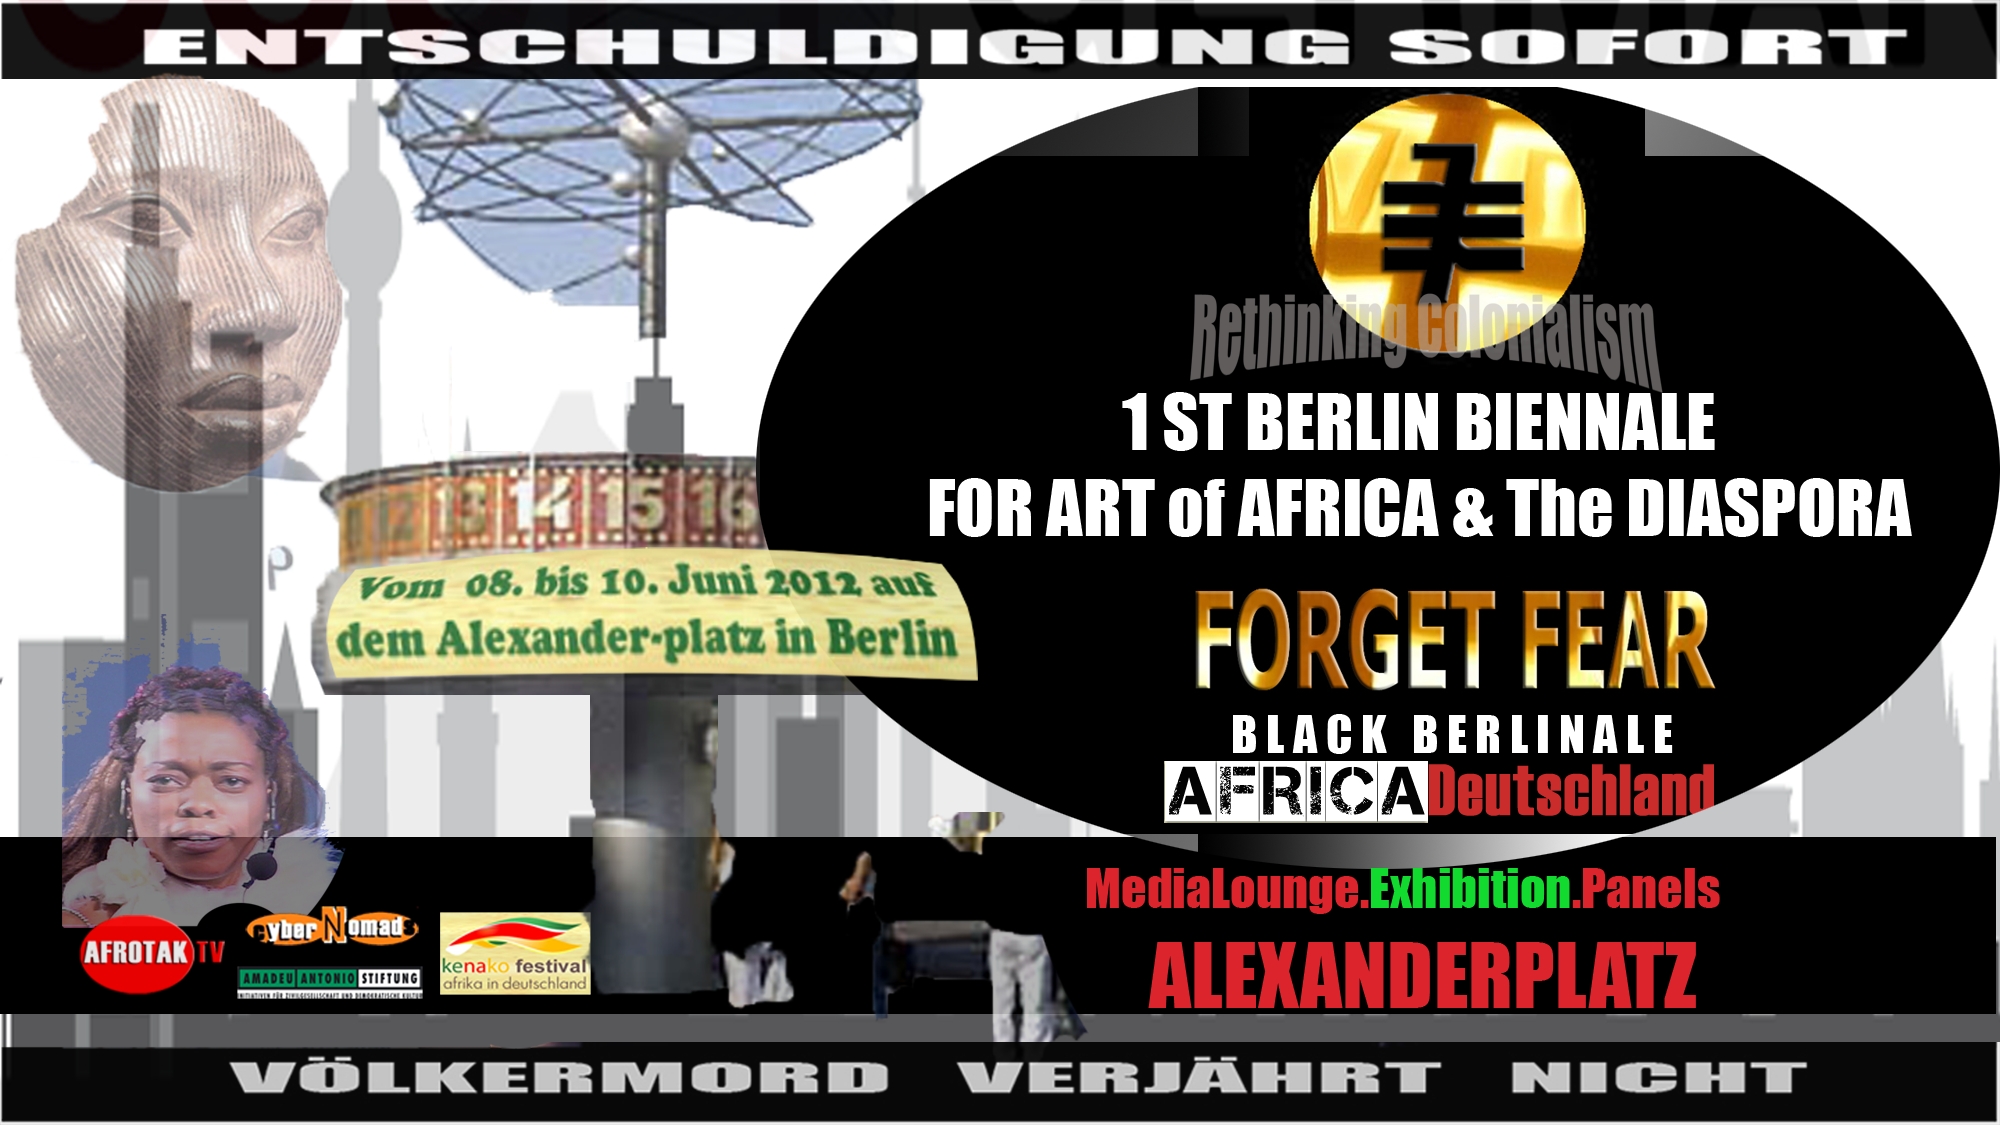 KENAKO Afrika Festival Berlin AFRIKA Biennale Berlin VISIT AFROTAK TV cyberNomads Media Lounge Afrika Deutschland Afrika Berlin Alexanderplatz